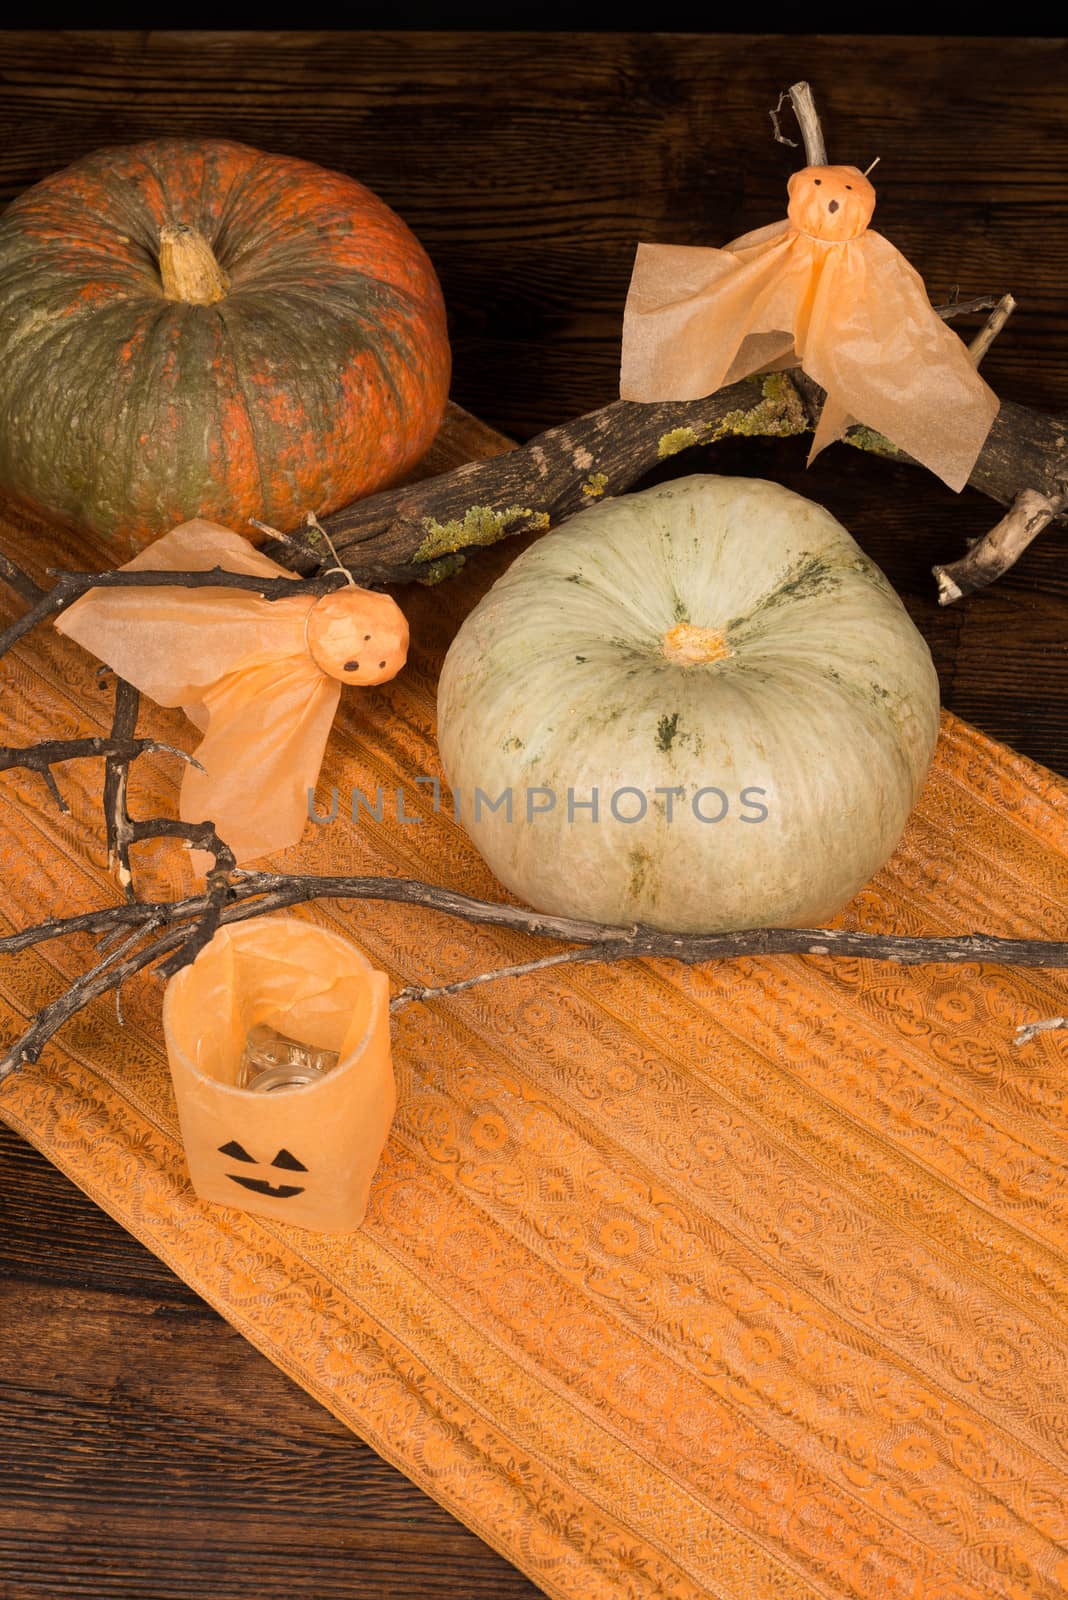 Rustic Halloween decoration by hemeroskopion